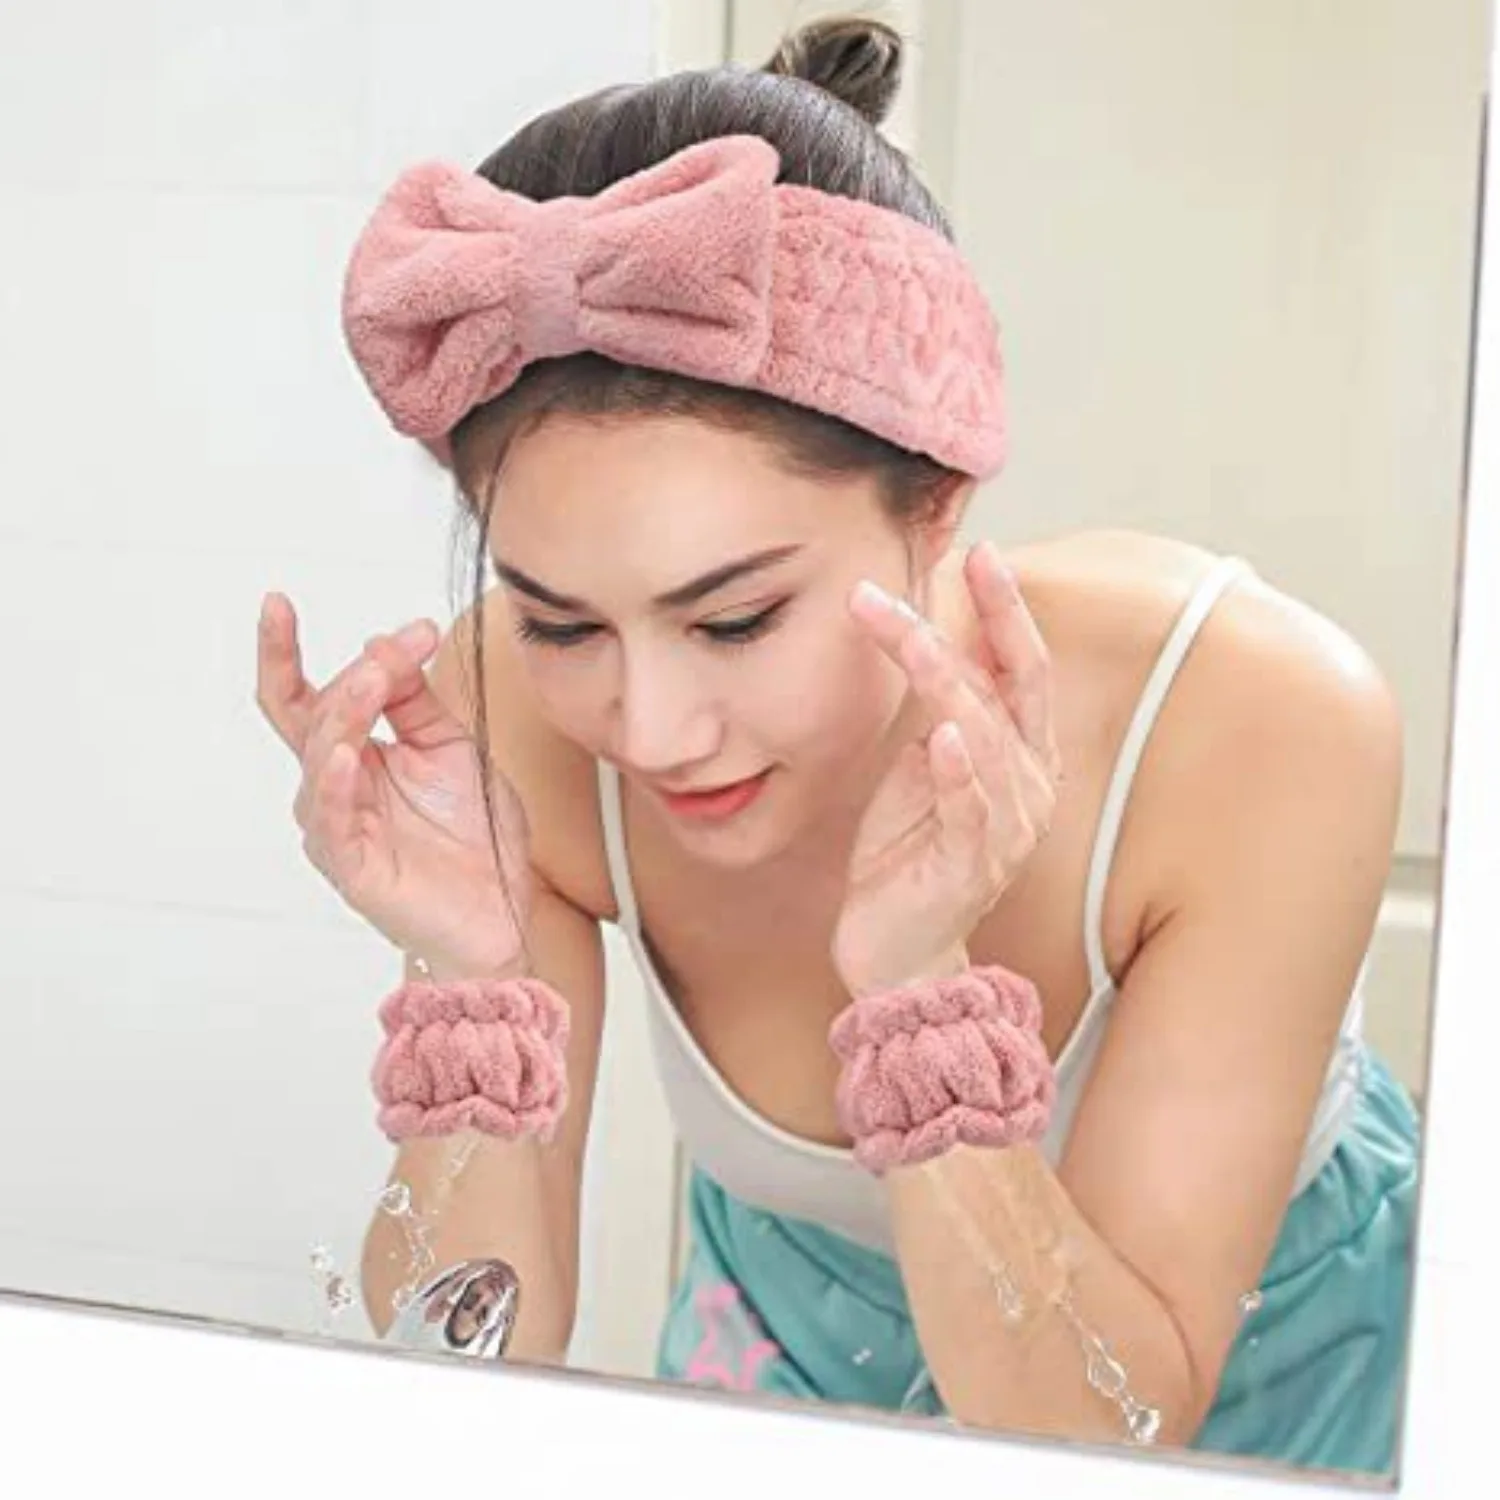 Makeup Headband Puffy Sponge Spa Head Bands for Women Girls Washing Face Skincare Yoga Facial Mask Sports Hairbands Headwear